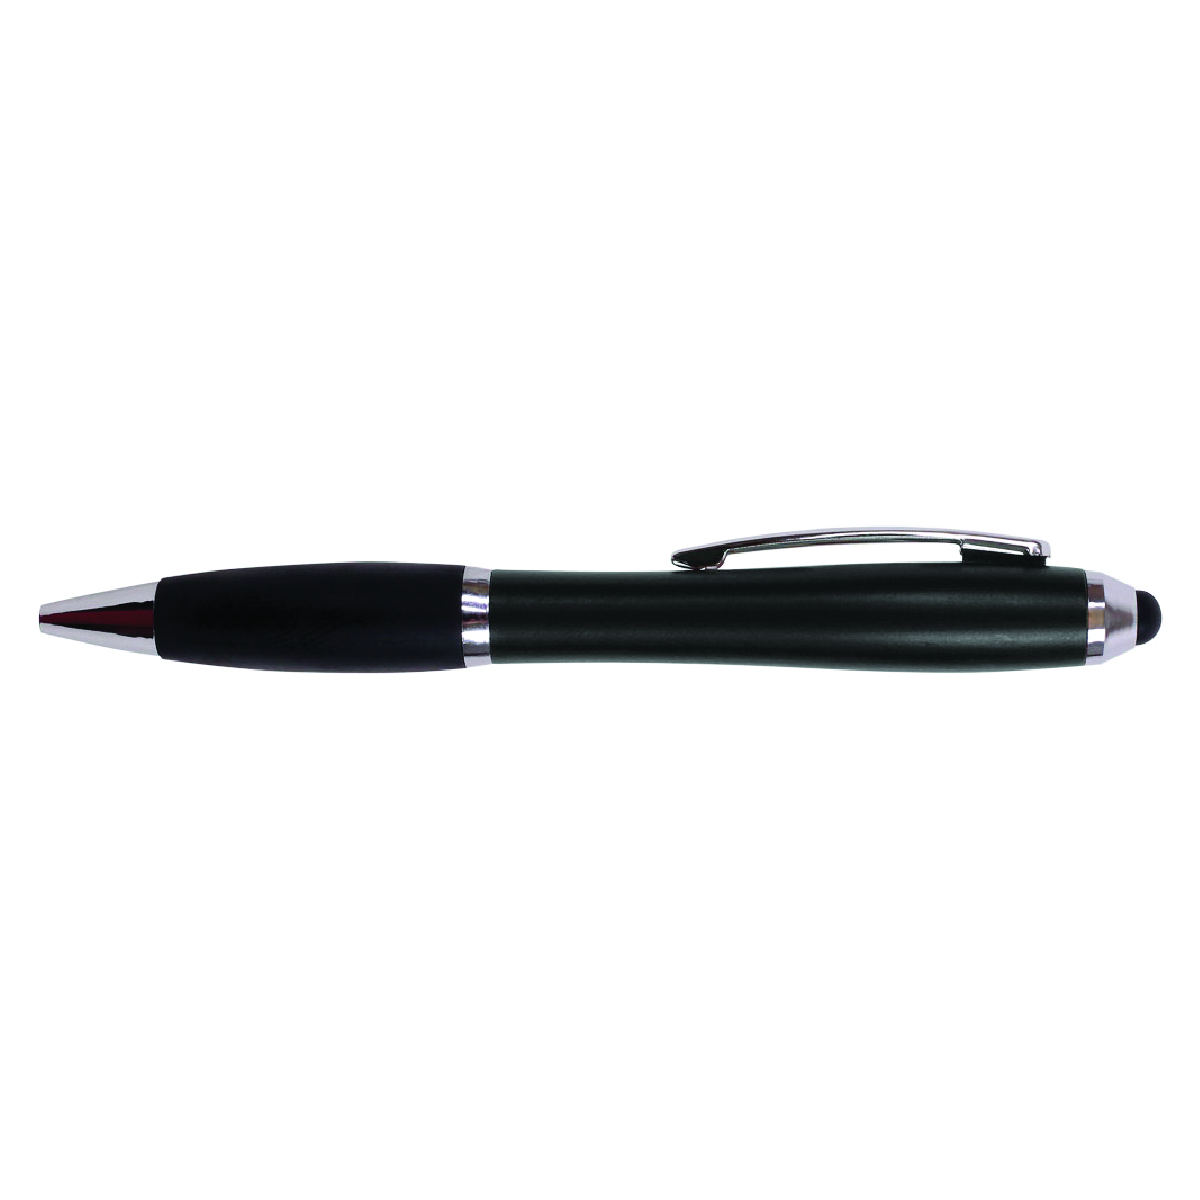 Black The Grenada Stylus Pen